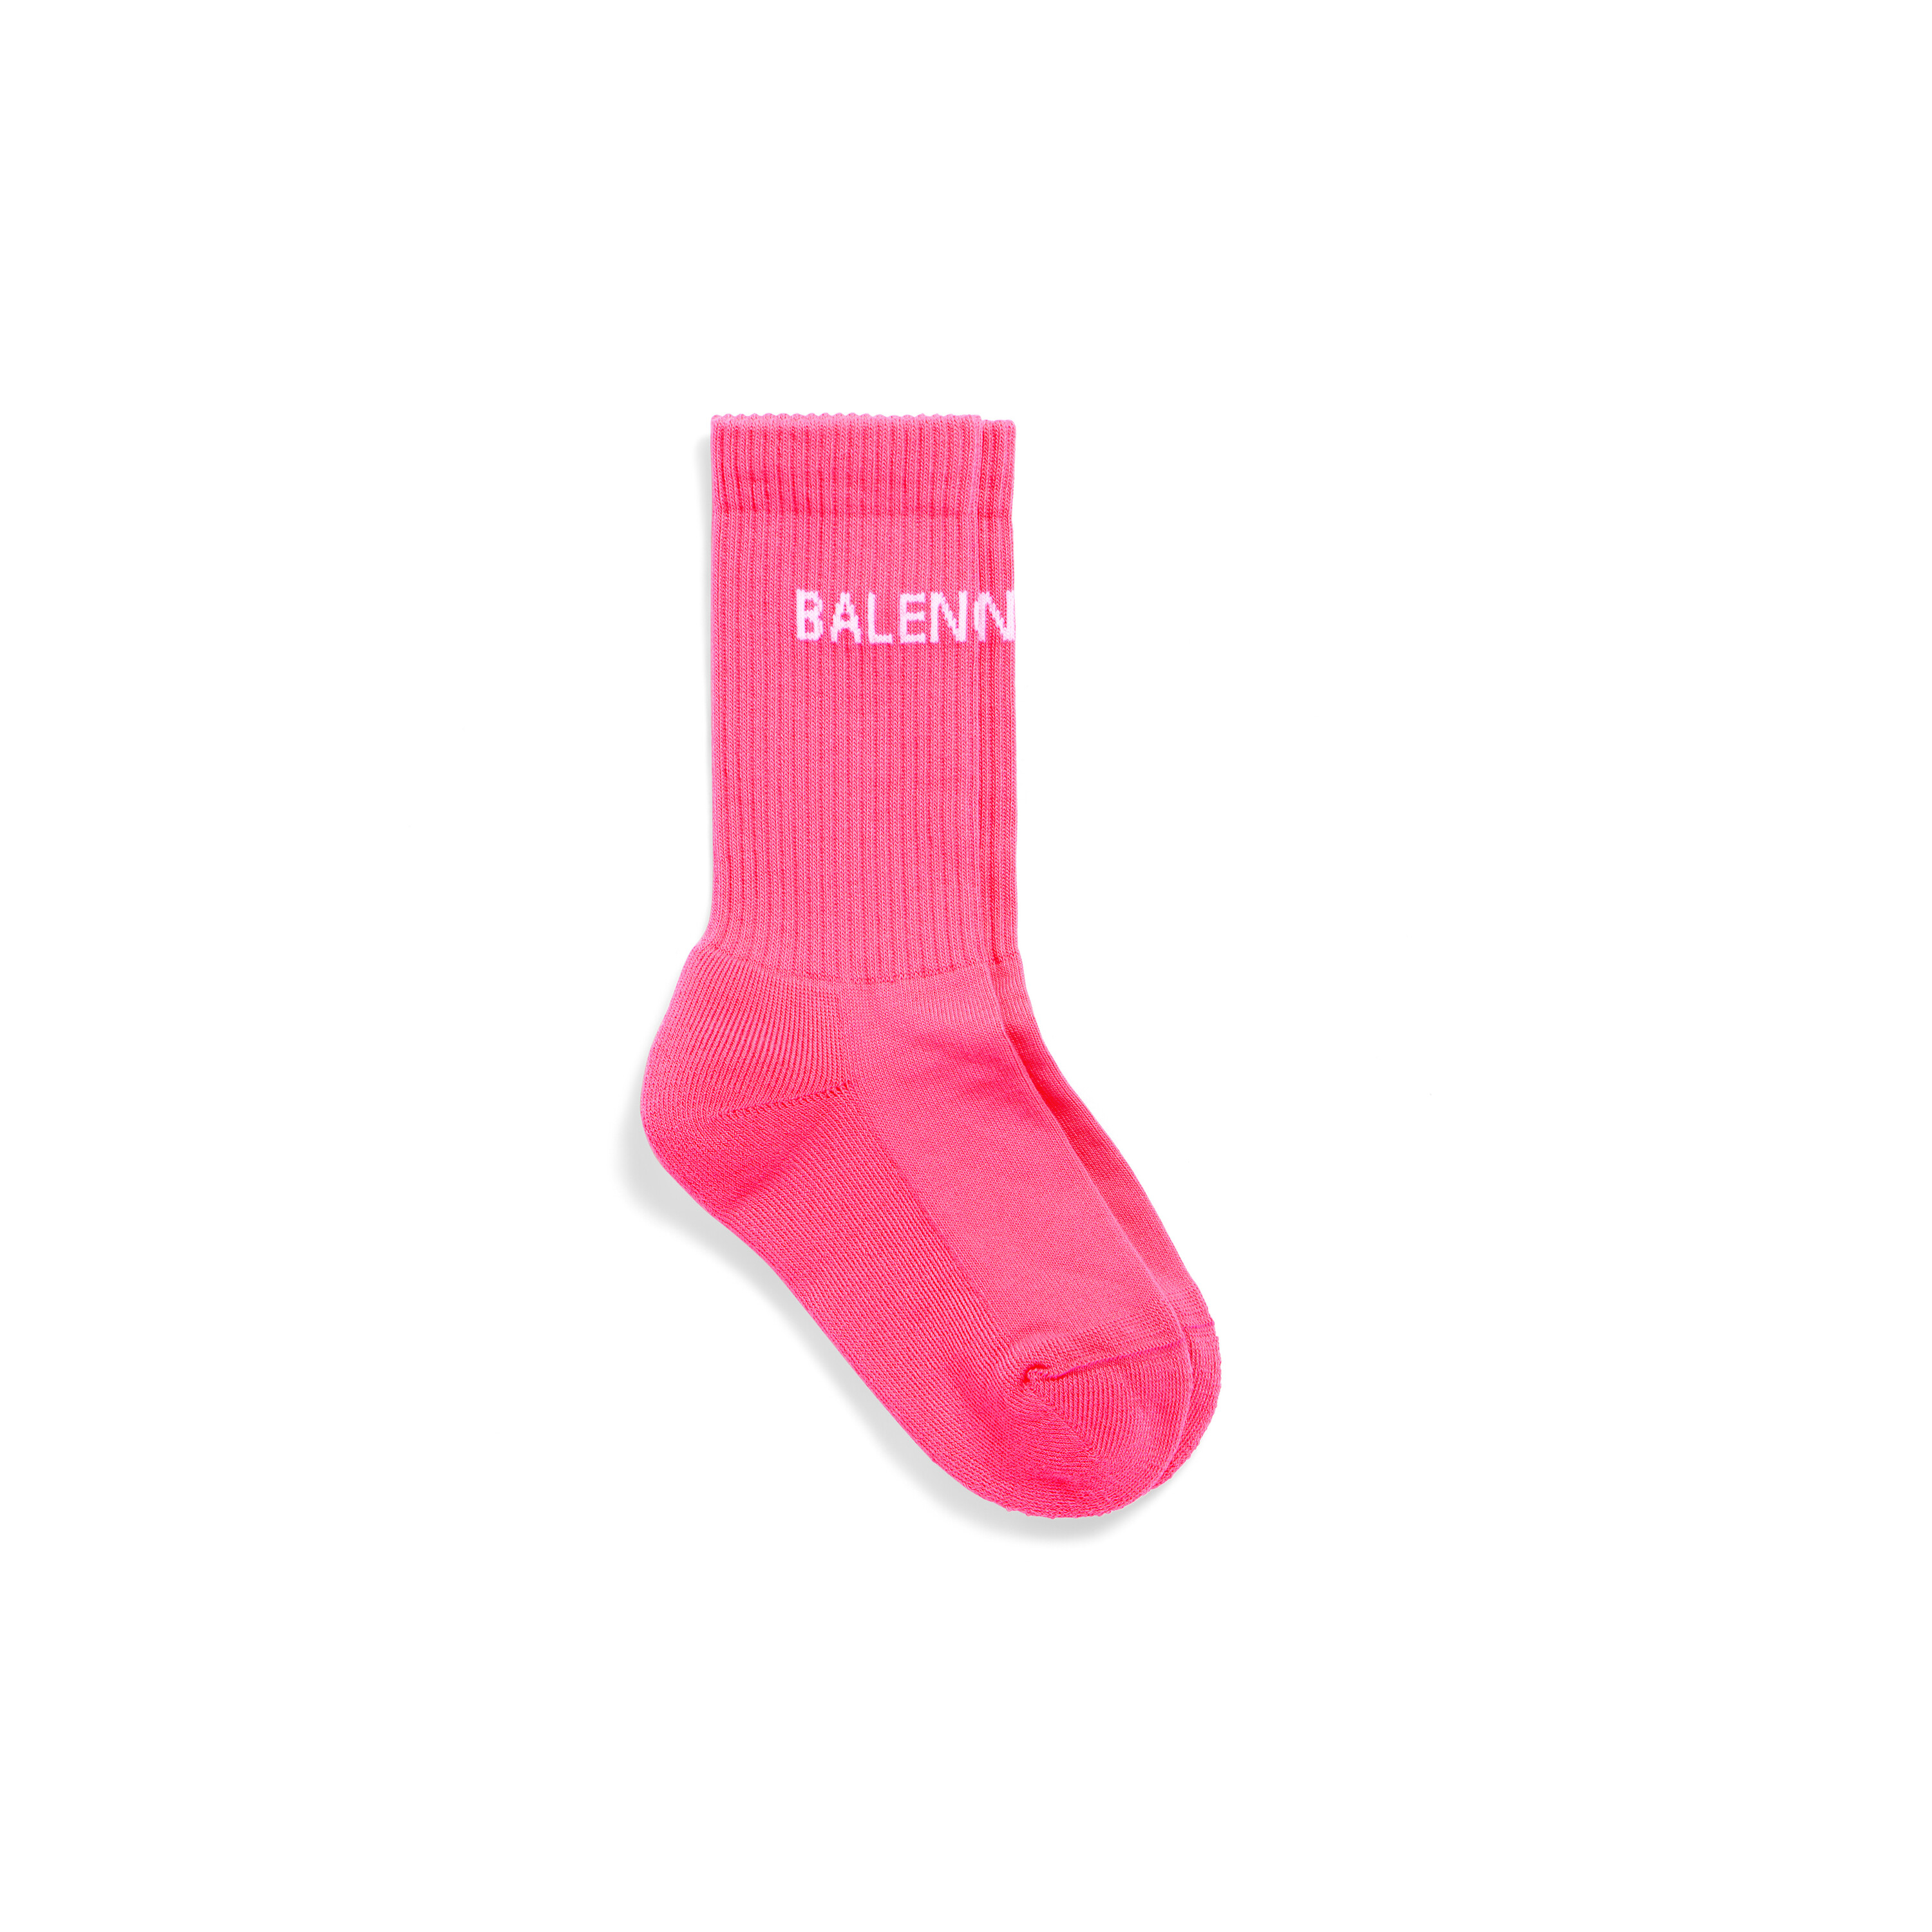 Balenciaga Tennis Socks in Bright | US